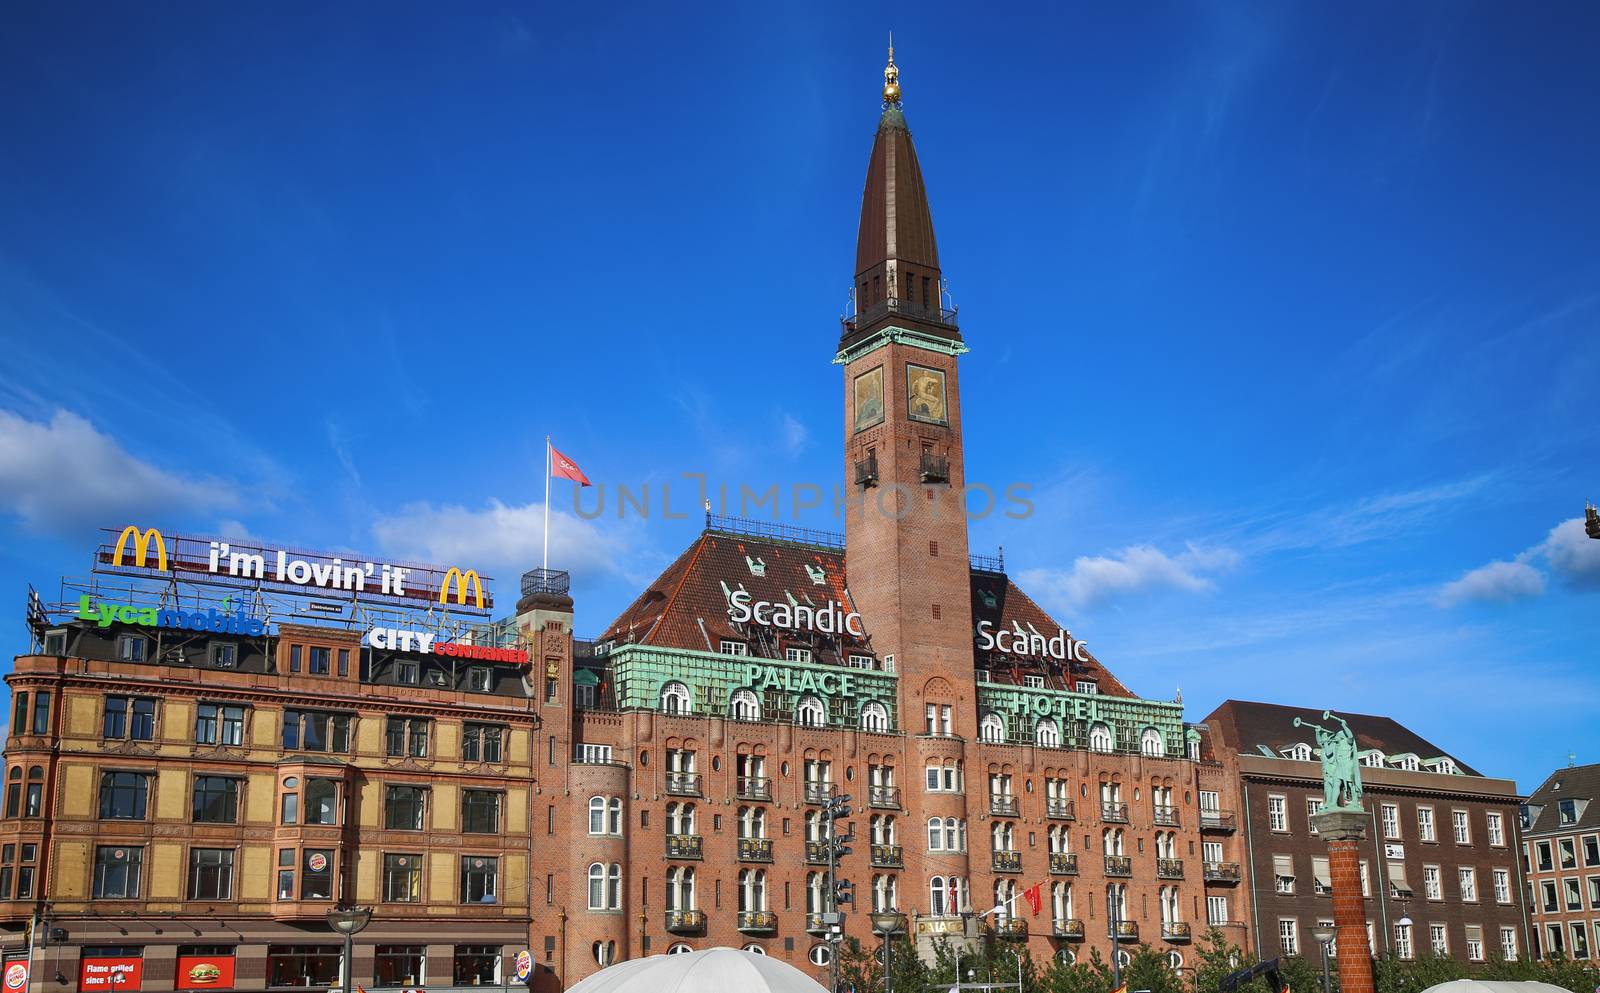 COPENHAGEN, DENMARK - AUGUST 15, 2016: Scandic Palace Hotel is a by vladacanon